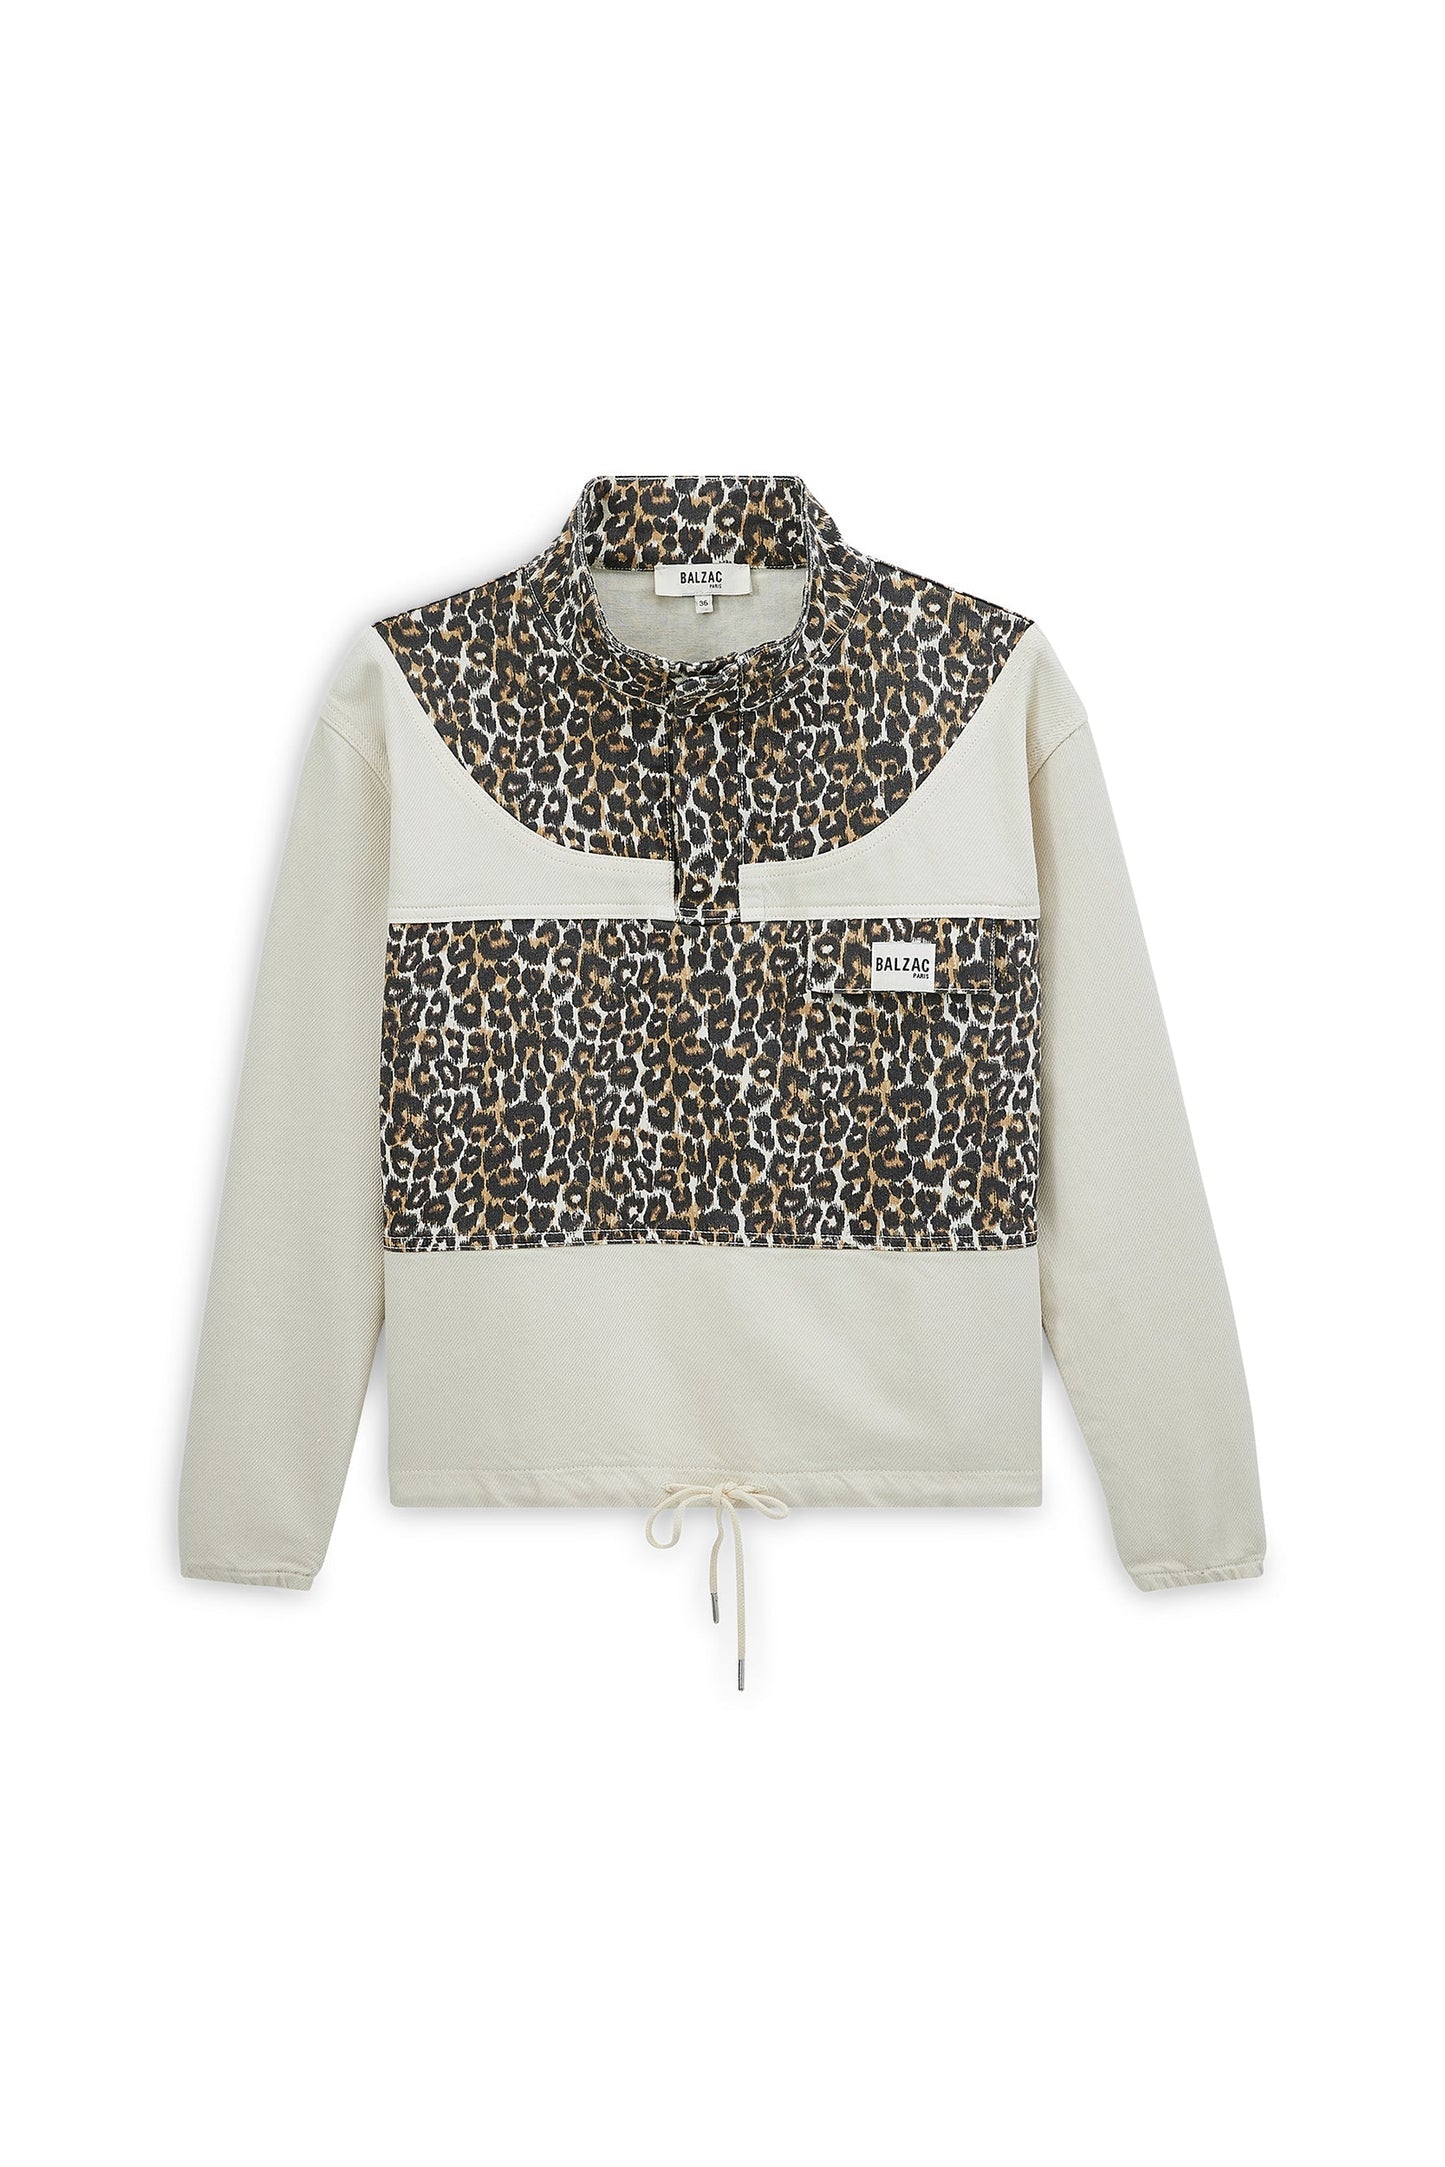 Prévert ecru and leopard sweatshirt